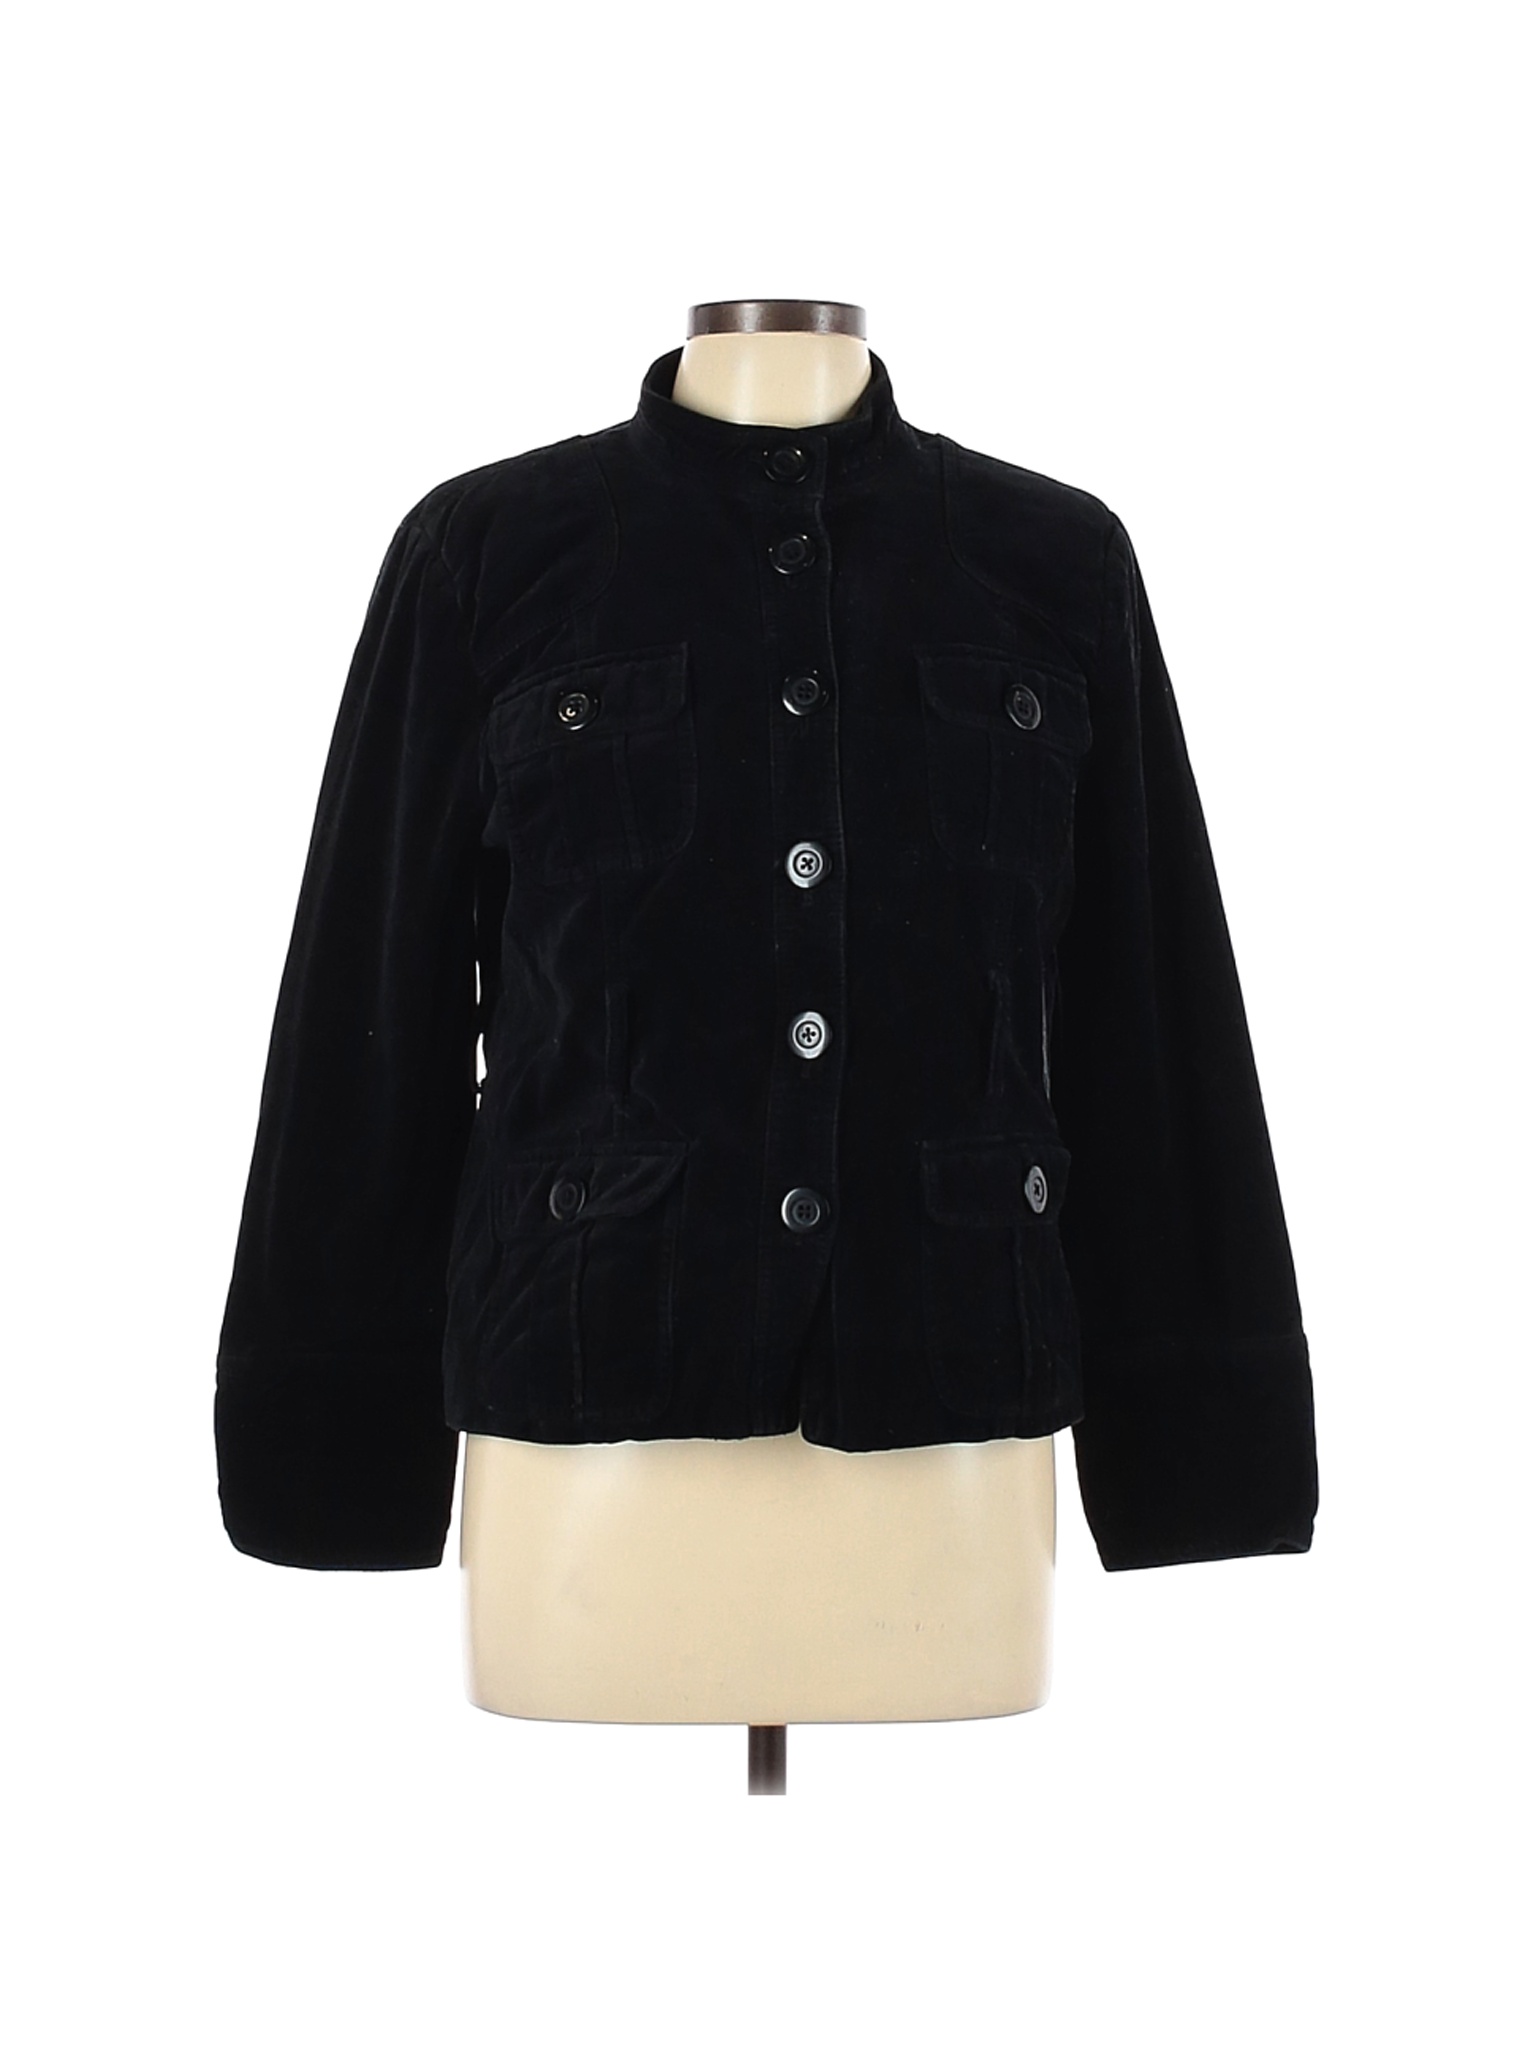 Willi Smith Women Black Jacket L | eBay